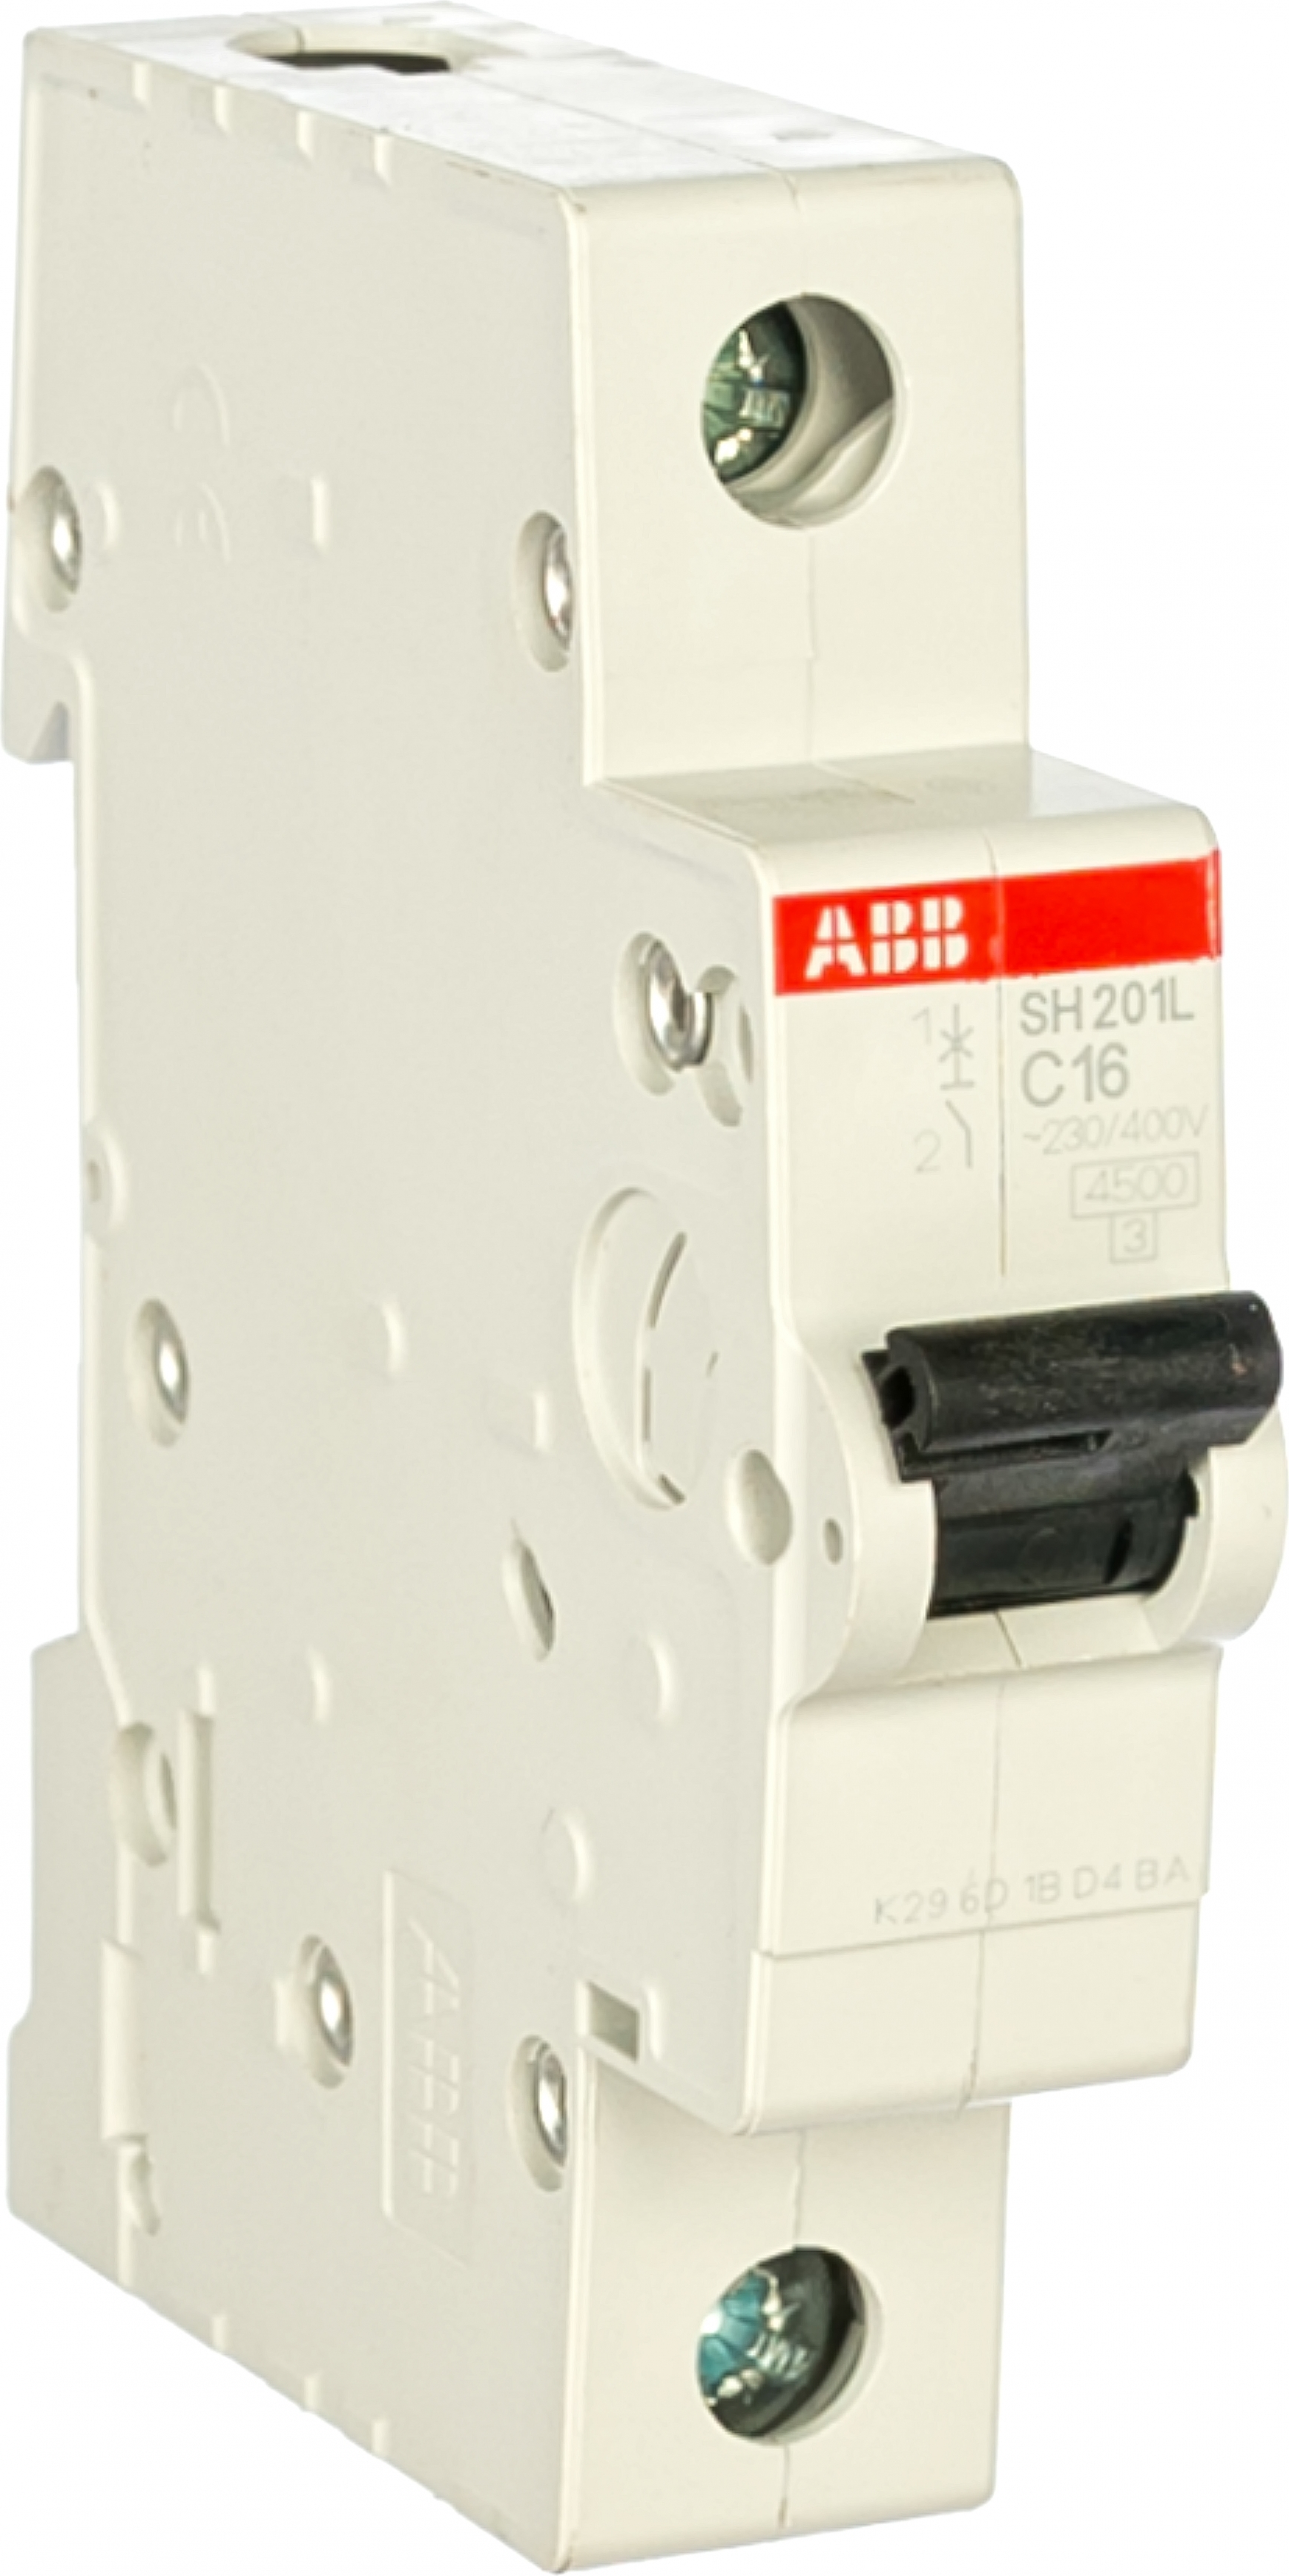 Автоматический выключатель abb sh201l